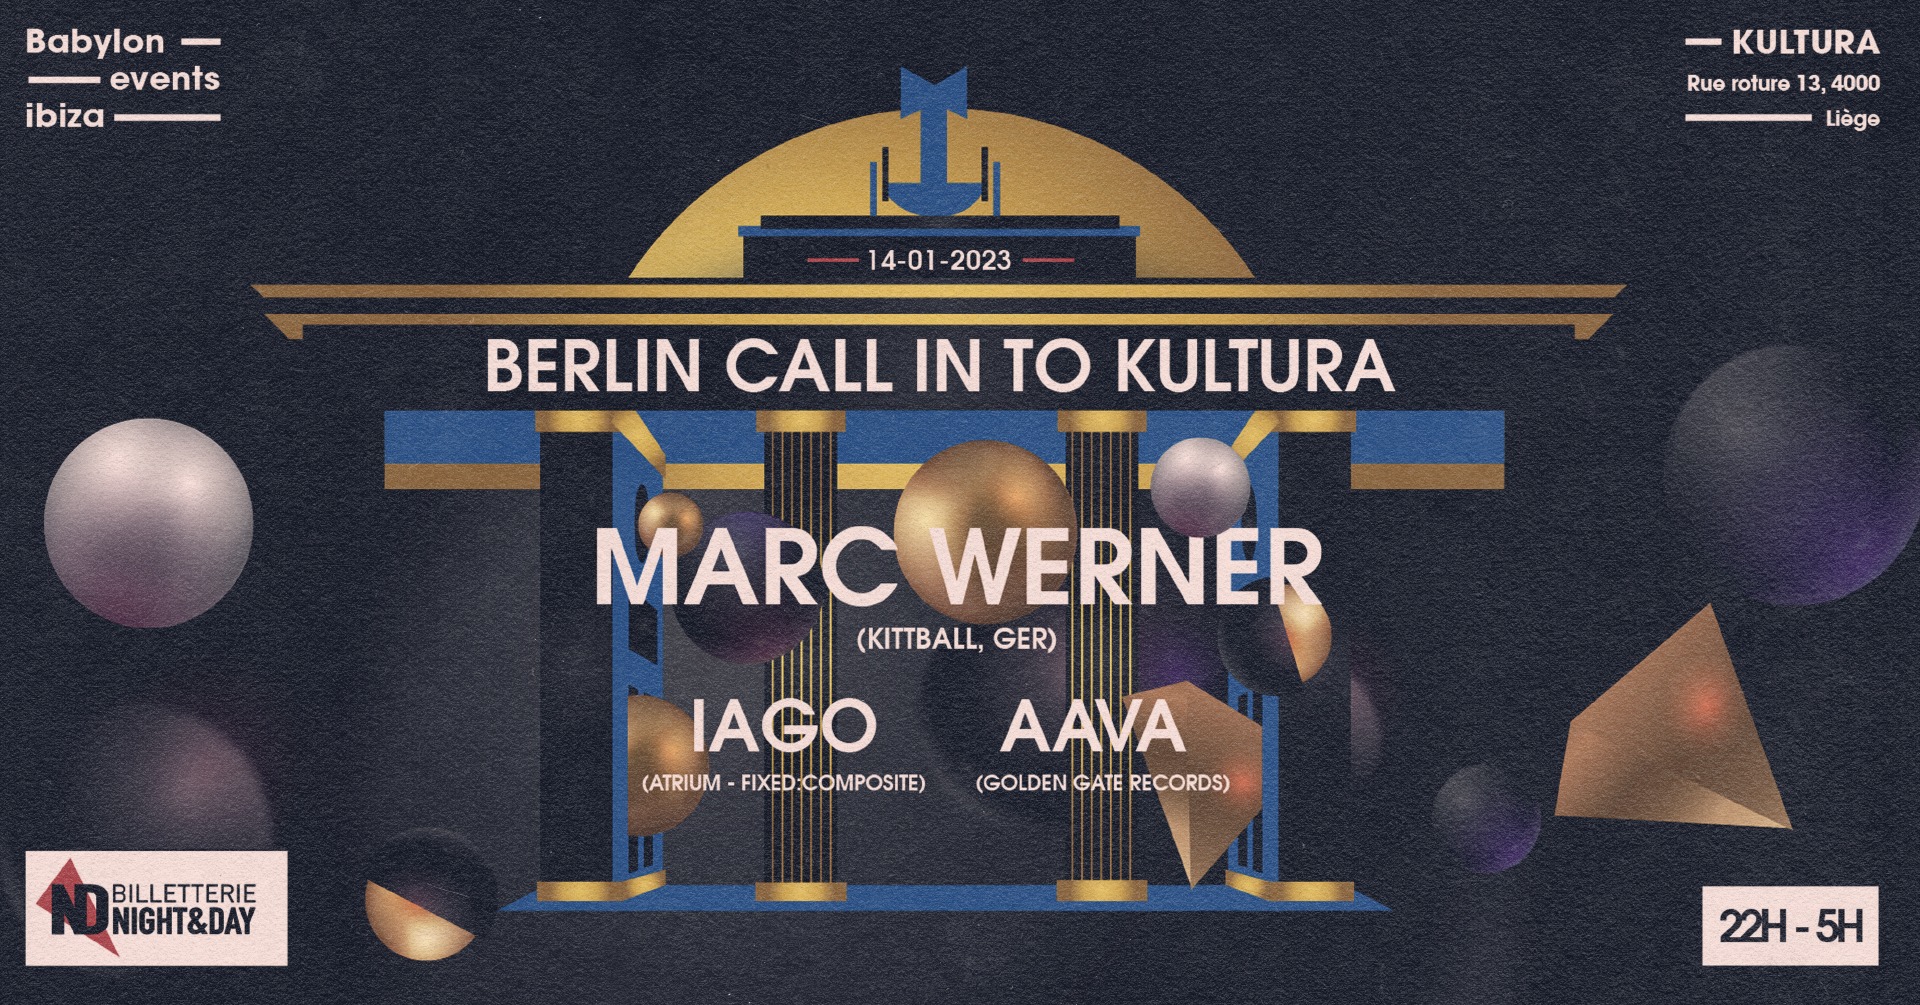 Berlin call in to Kultura Liege